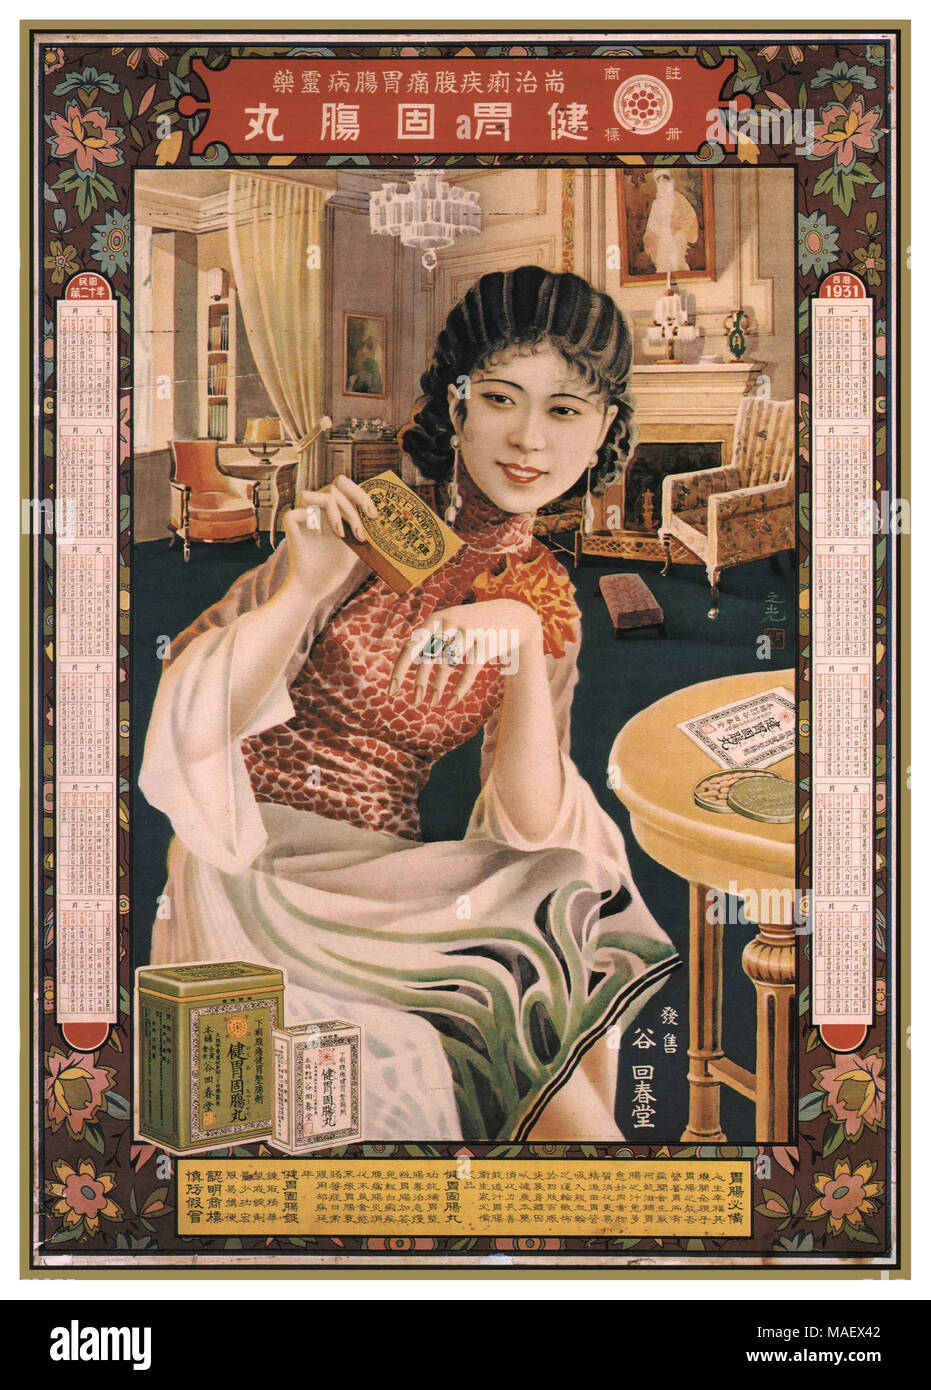 Cinese Vintage Poster pubblicitario 1931 Kohojo compresse Vintage le donne cinesi Pin-Up ispirato Poster pubblicitario per la medicina compresse stampate in 1931. Foto Stock